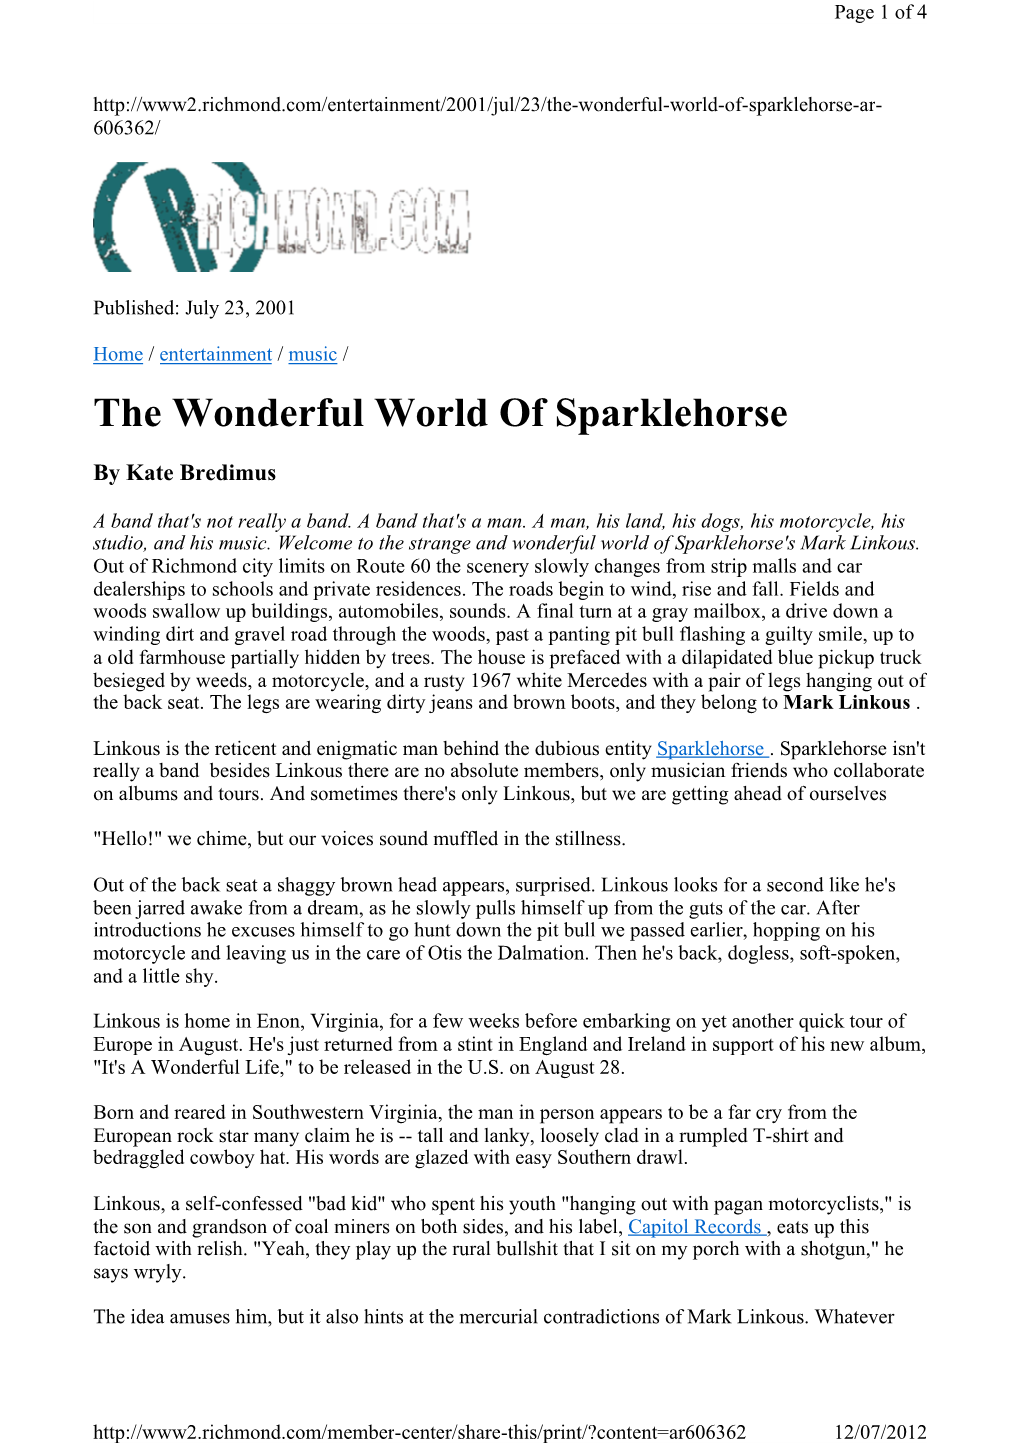 Richmond.Com “The Wonderful World of Sparklehorse”